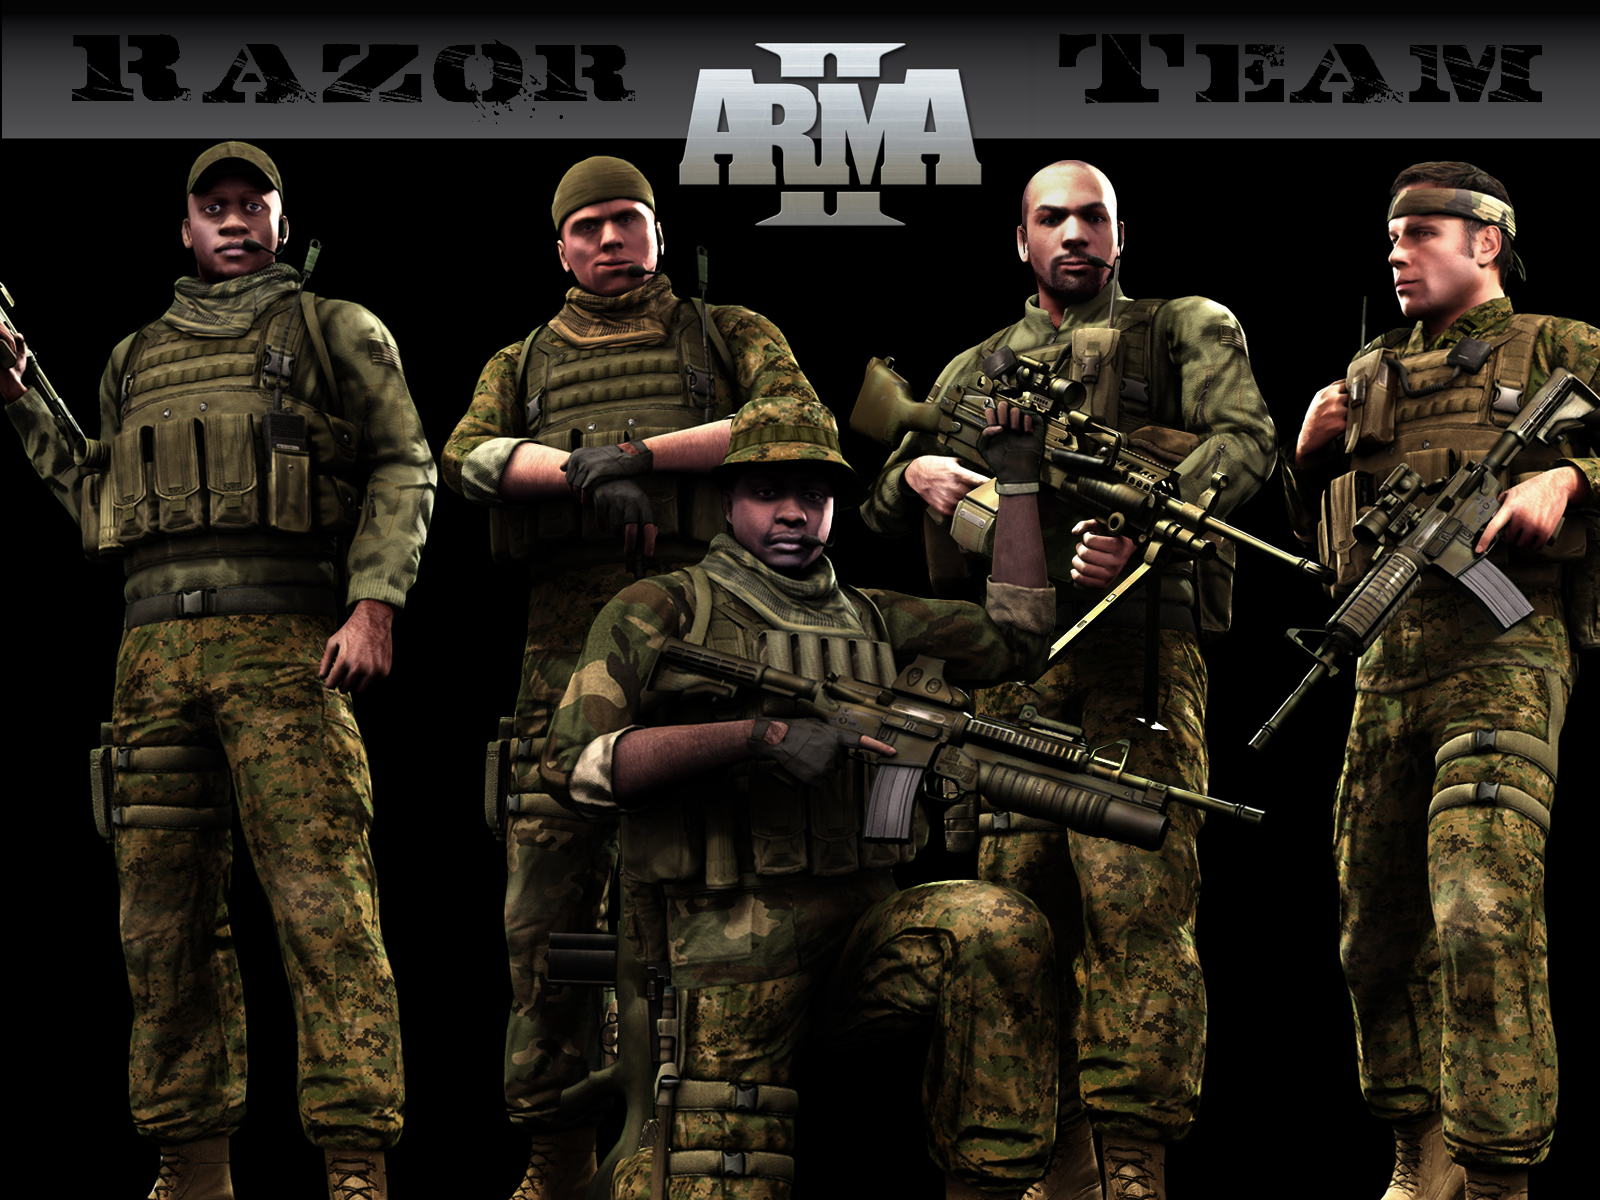 arma-ii-razor-team-image-united-gamers-of-serbia-mod-db